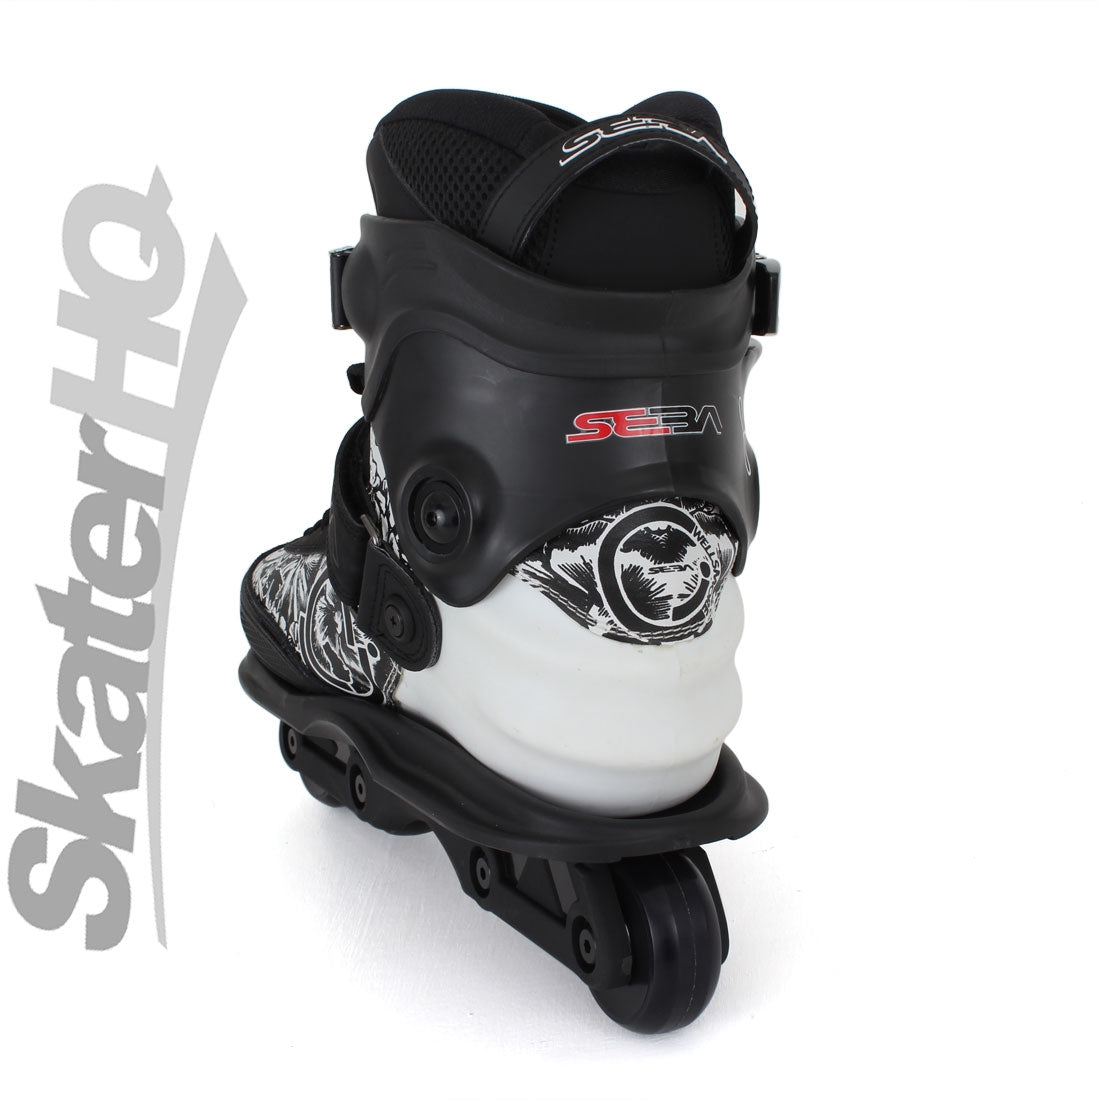 SEBA CJ 2 Pro Skate 10.5US/EU44 Inline Aggressive Skates